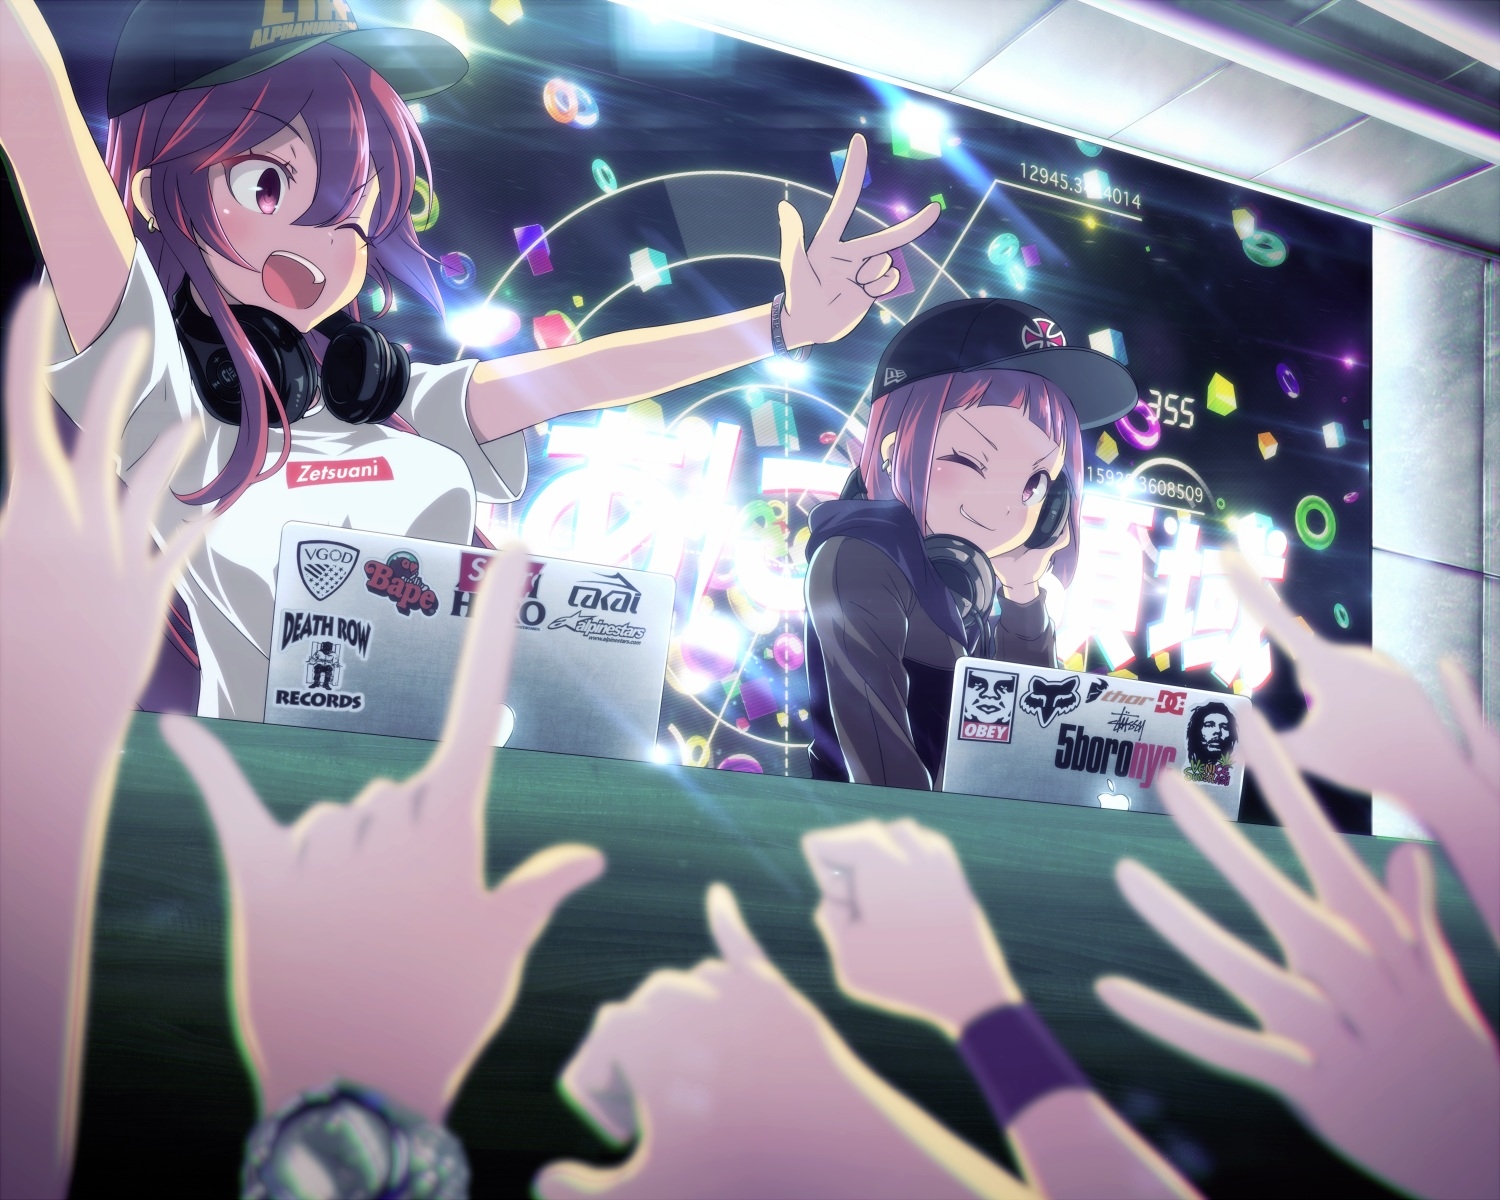 Anime 1500x1200 anime girls anime disc jockey concerts peace sign laptop headphones